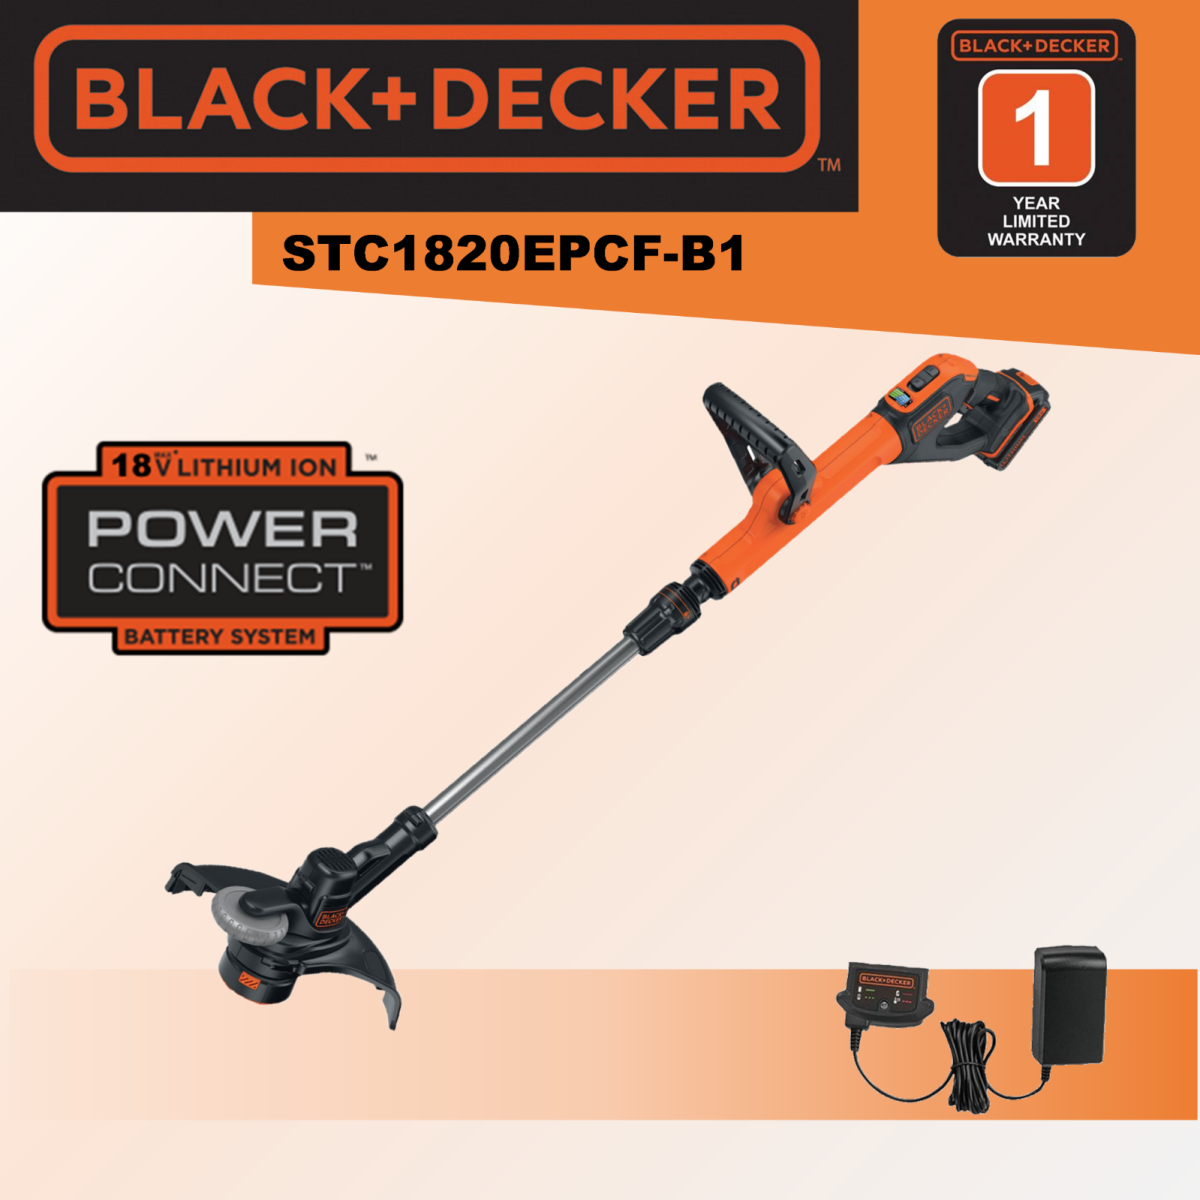 Buy Black&Decker 18V Battery Lawn Trimmer POWERCOMMAND Easy Feed 28cm